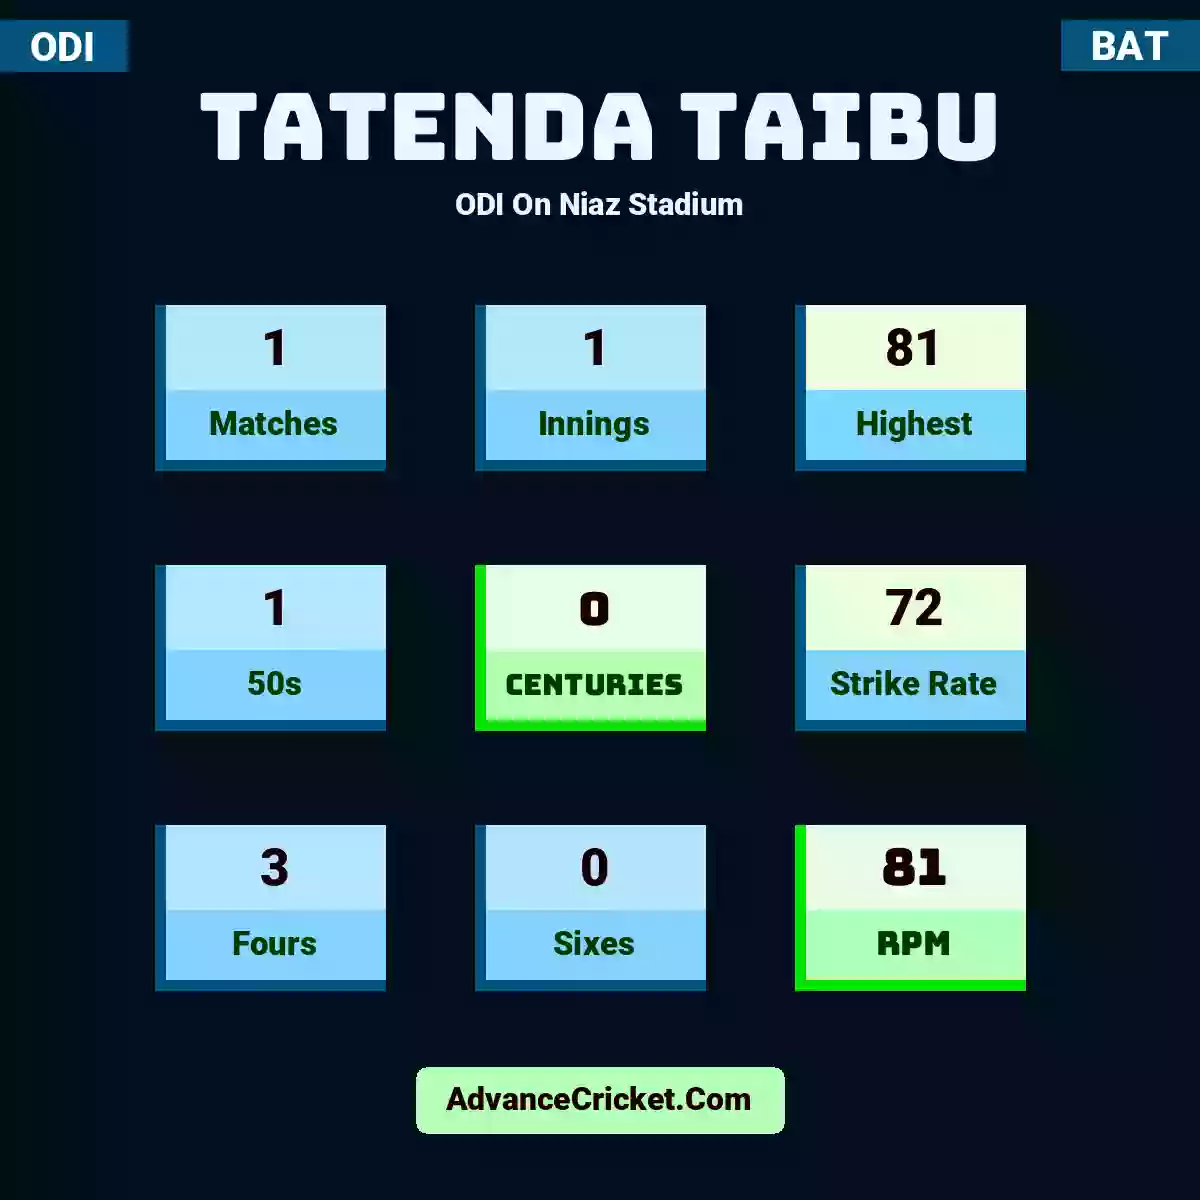 Tatenda Taibu ODI  On Niaz Stadium, Tatenda Taibu played 1 matches, scored 81 runs as highest, 1 half-centuries, and 0 centuries, with a strike rate of 72. T.Taibu hit 3 fours and 0 sixes, with an RPM of 81.